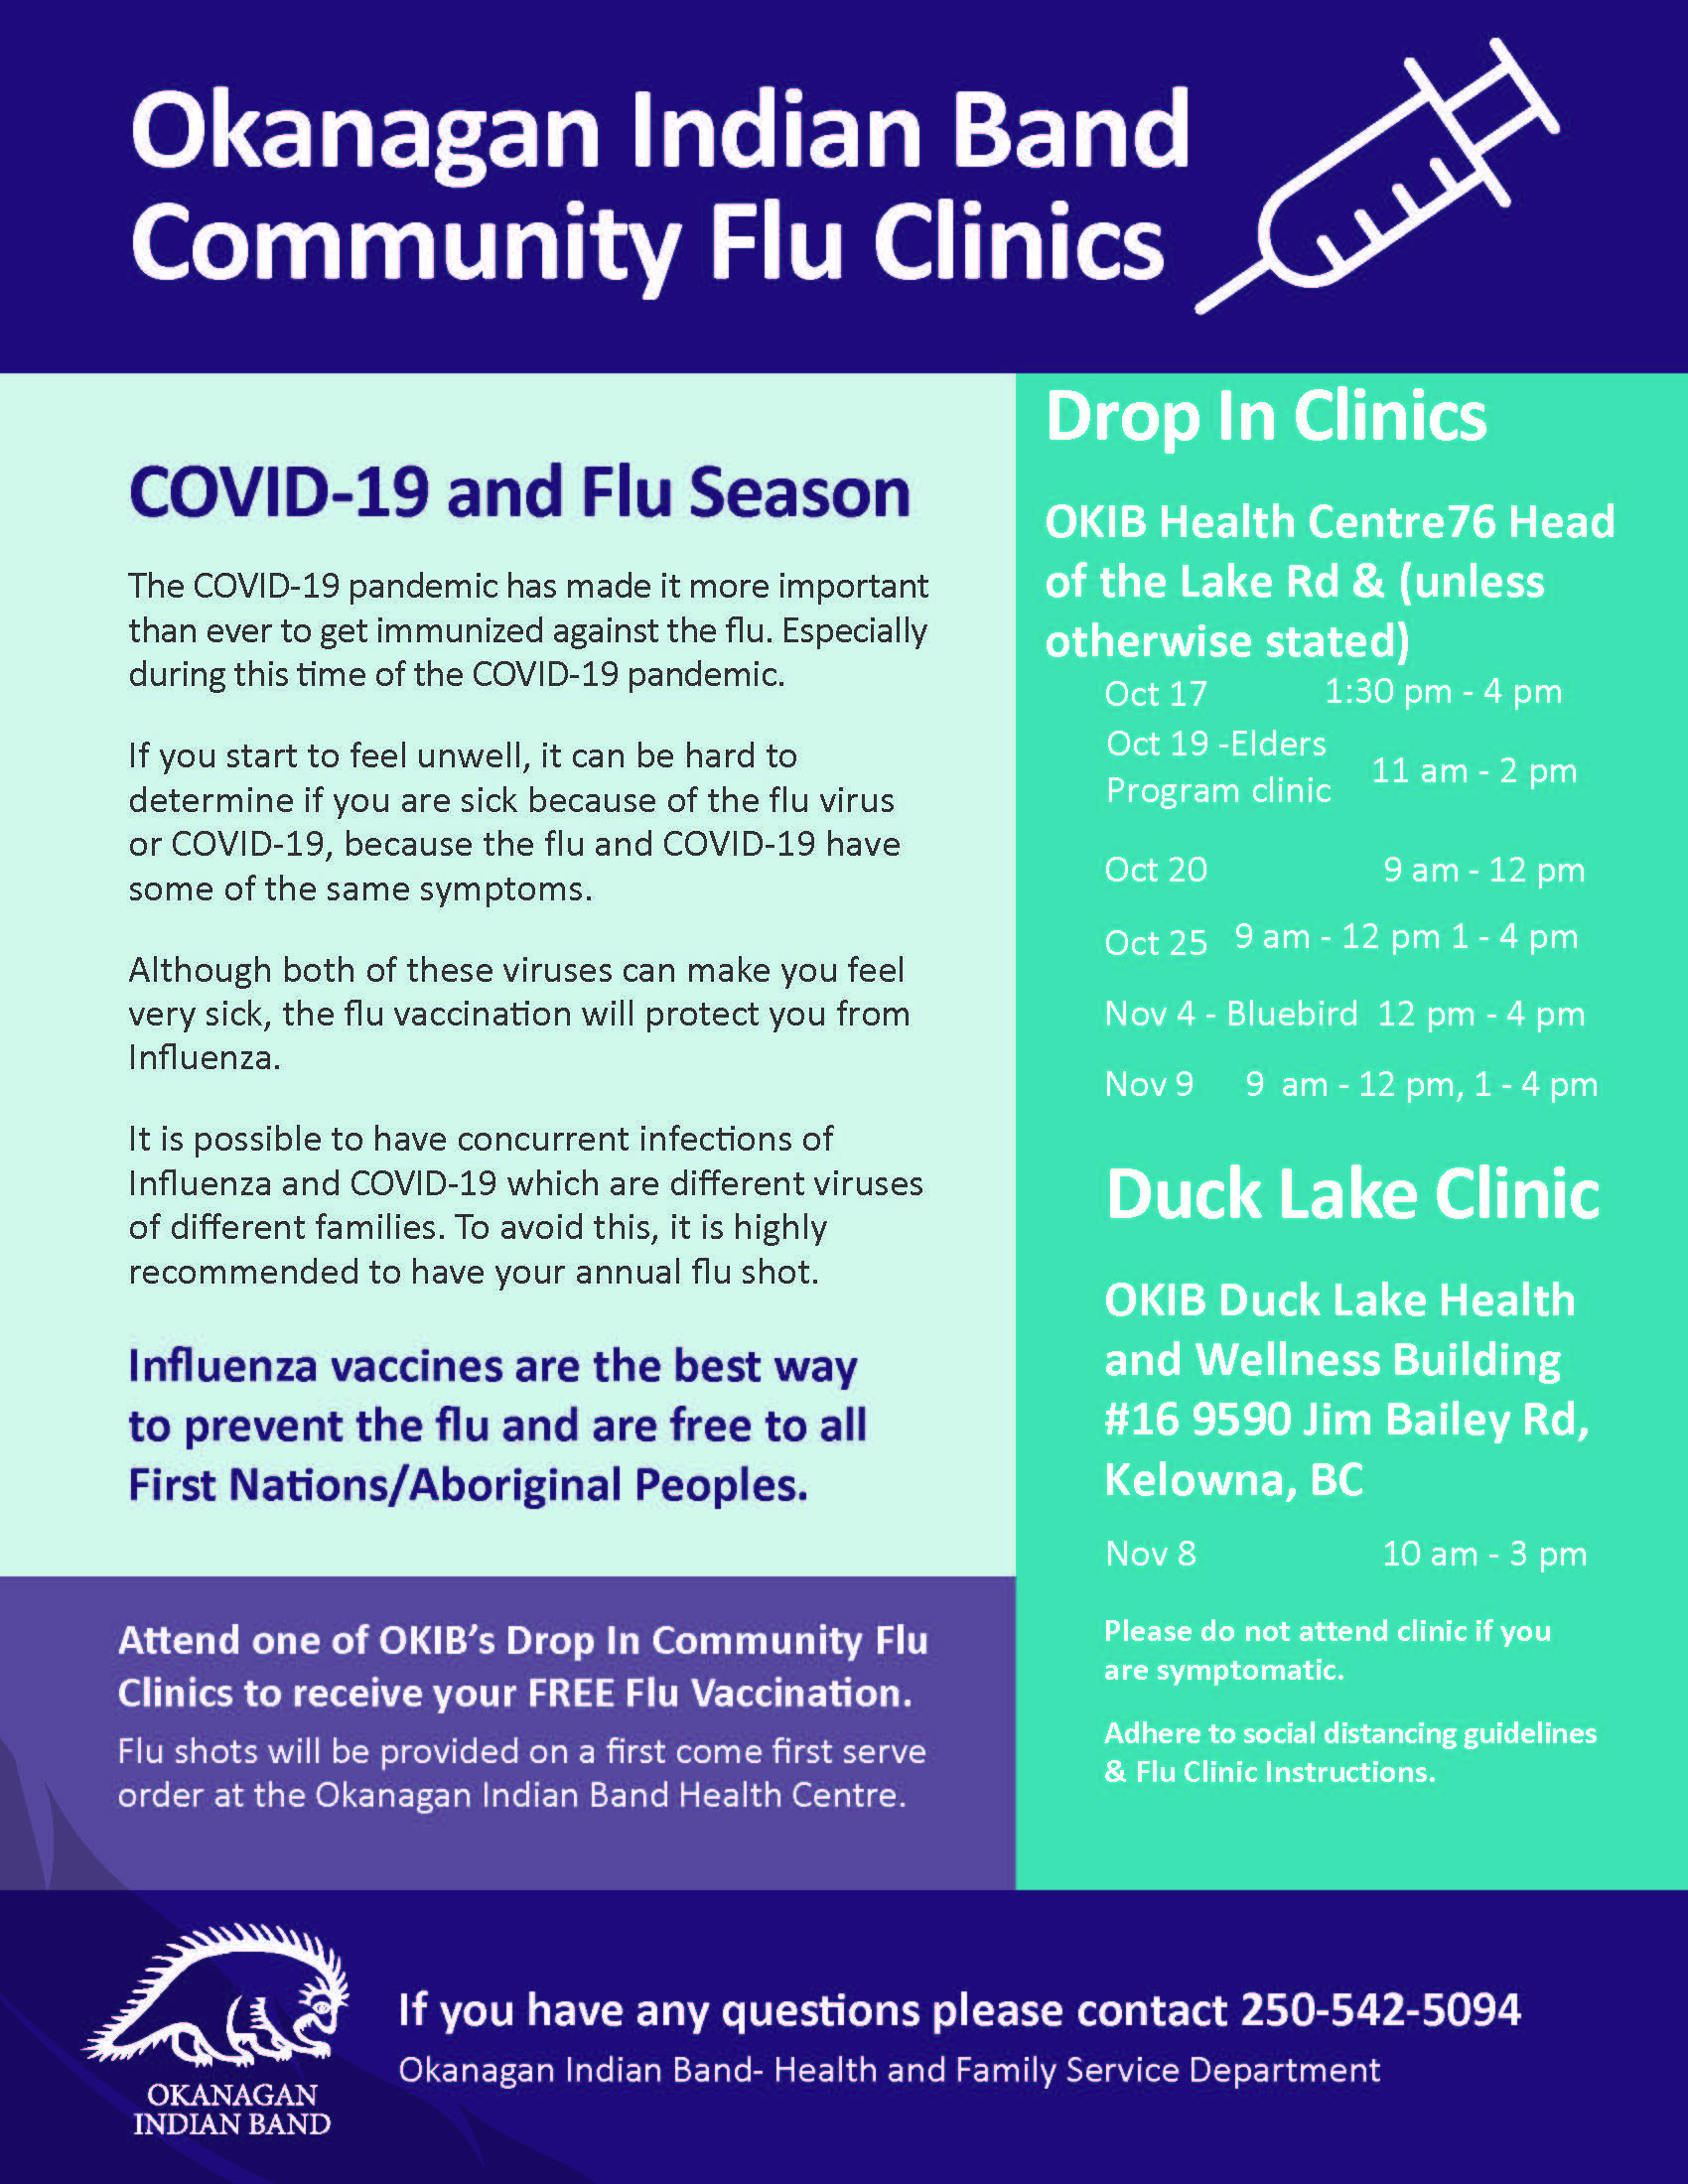 Okanagan Indian Band Community Flu & COVID-19 Clinics